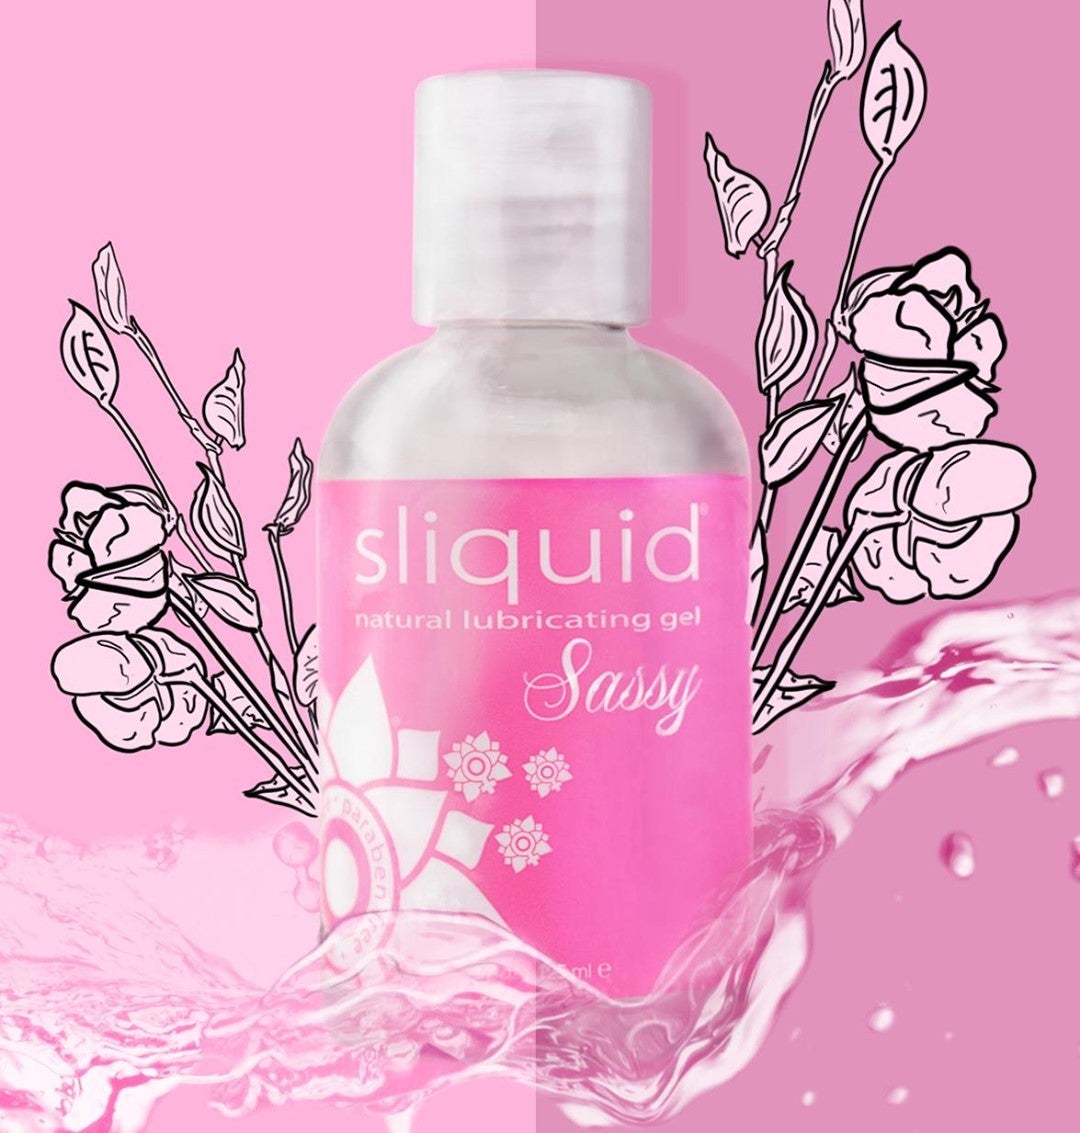 Pink bottle of Sliquid Sassy lubricant